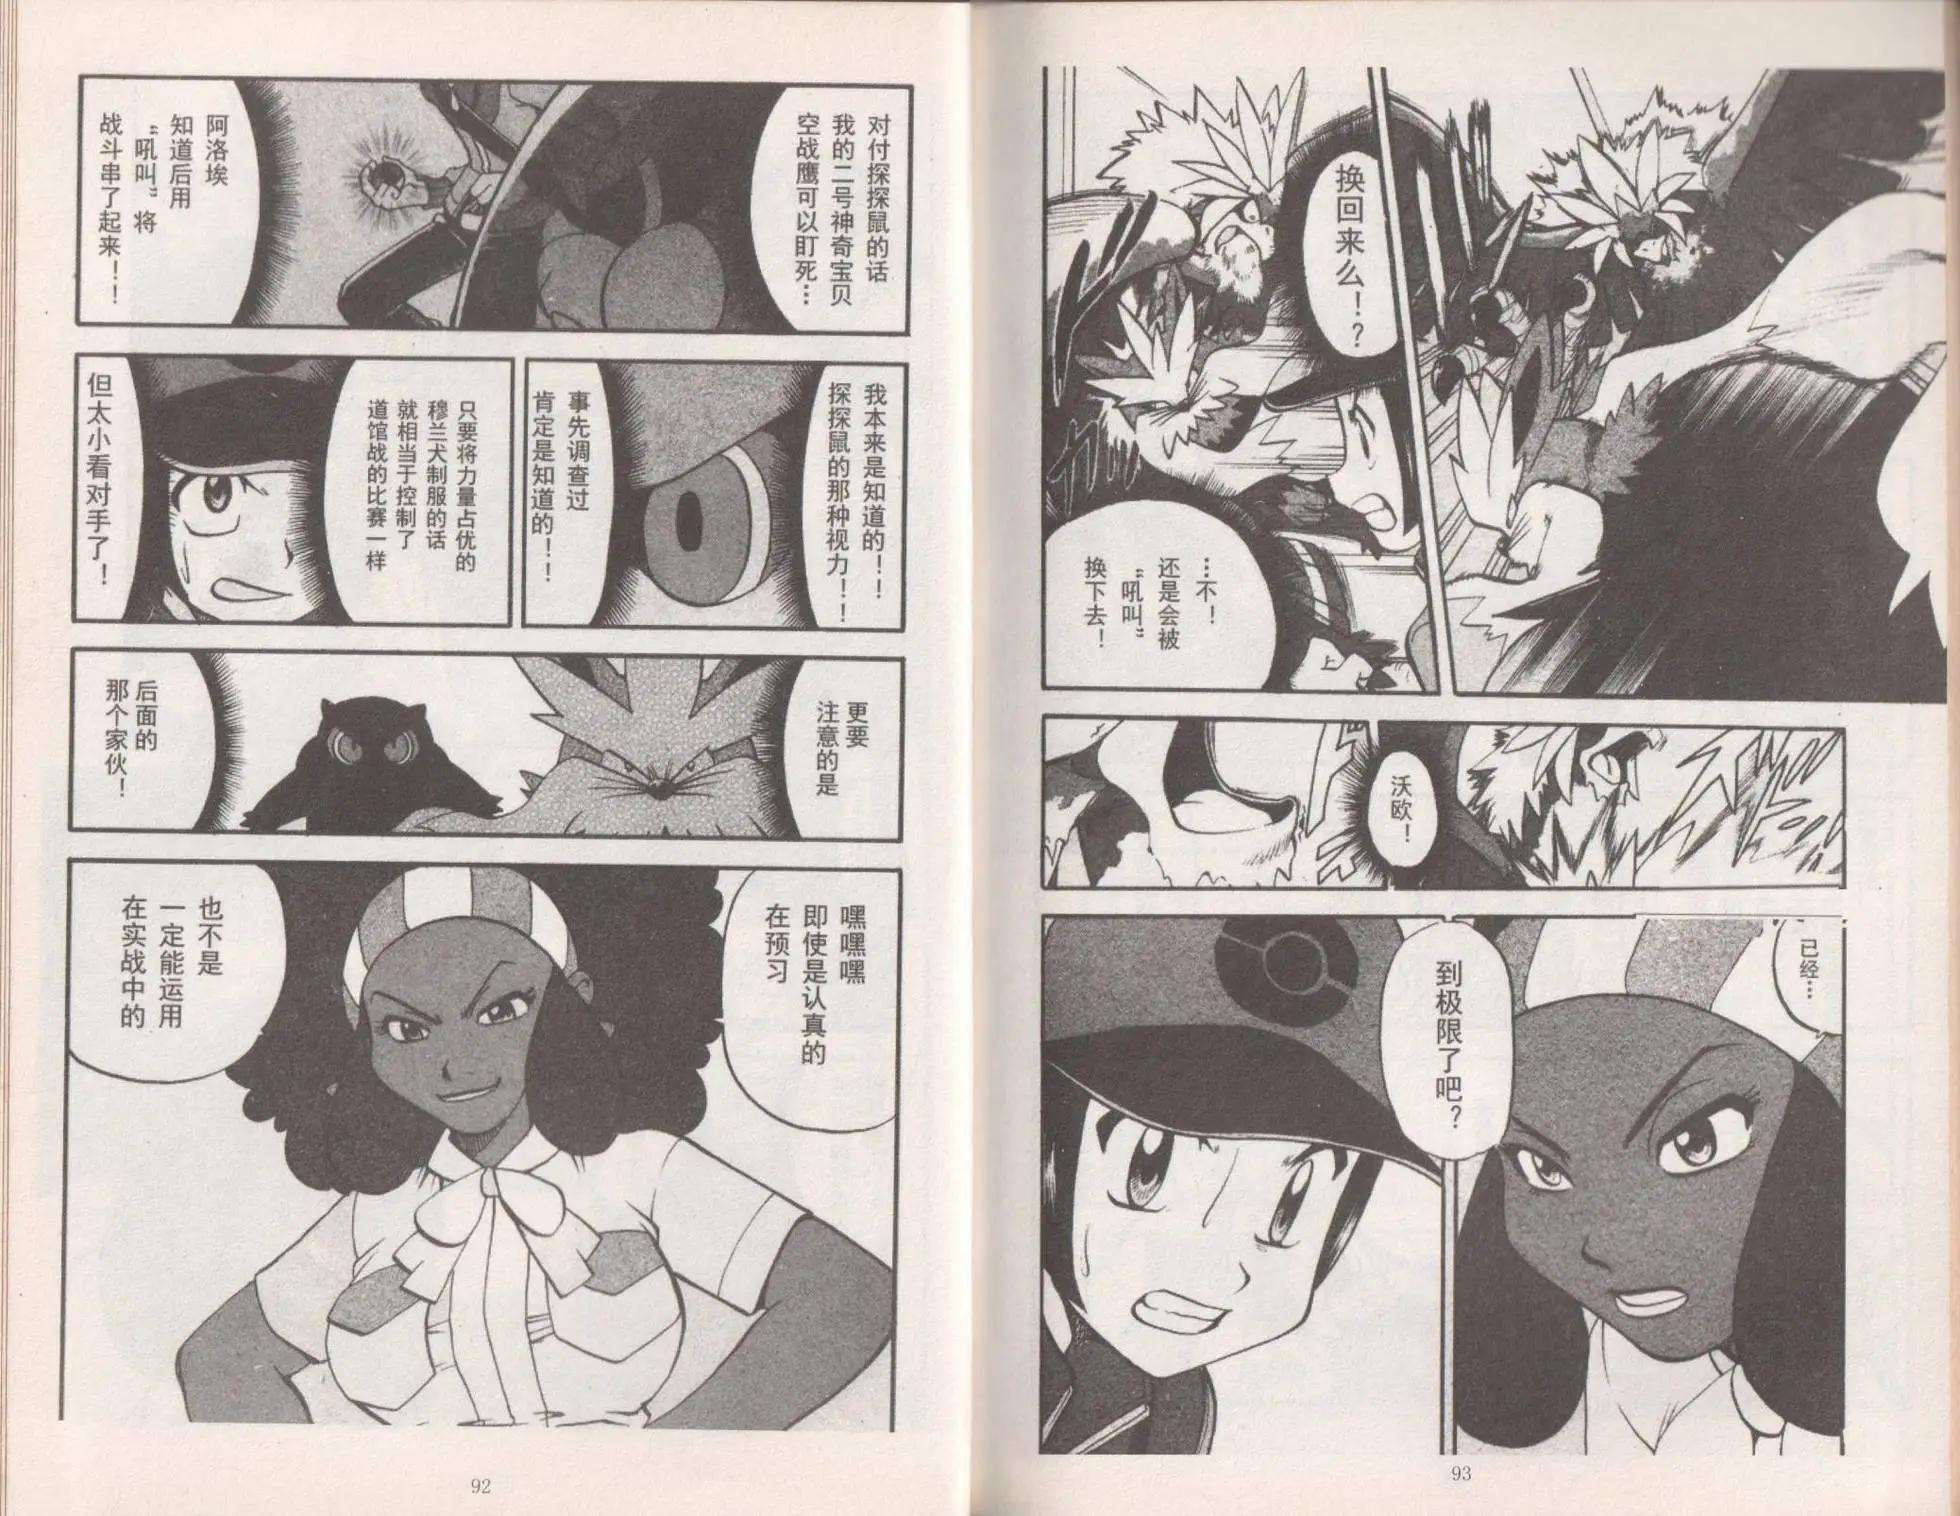 口袋迷pokemon - 第50卷(1/2) - 8